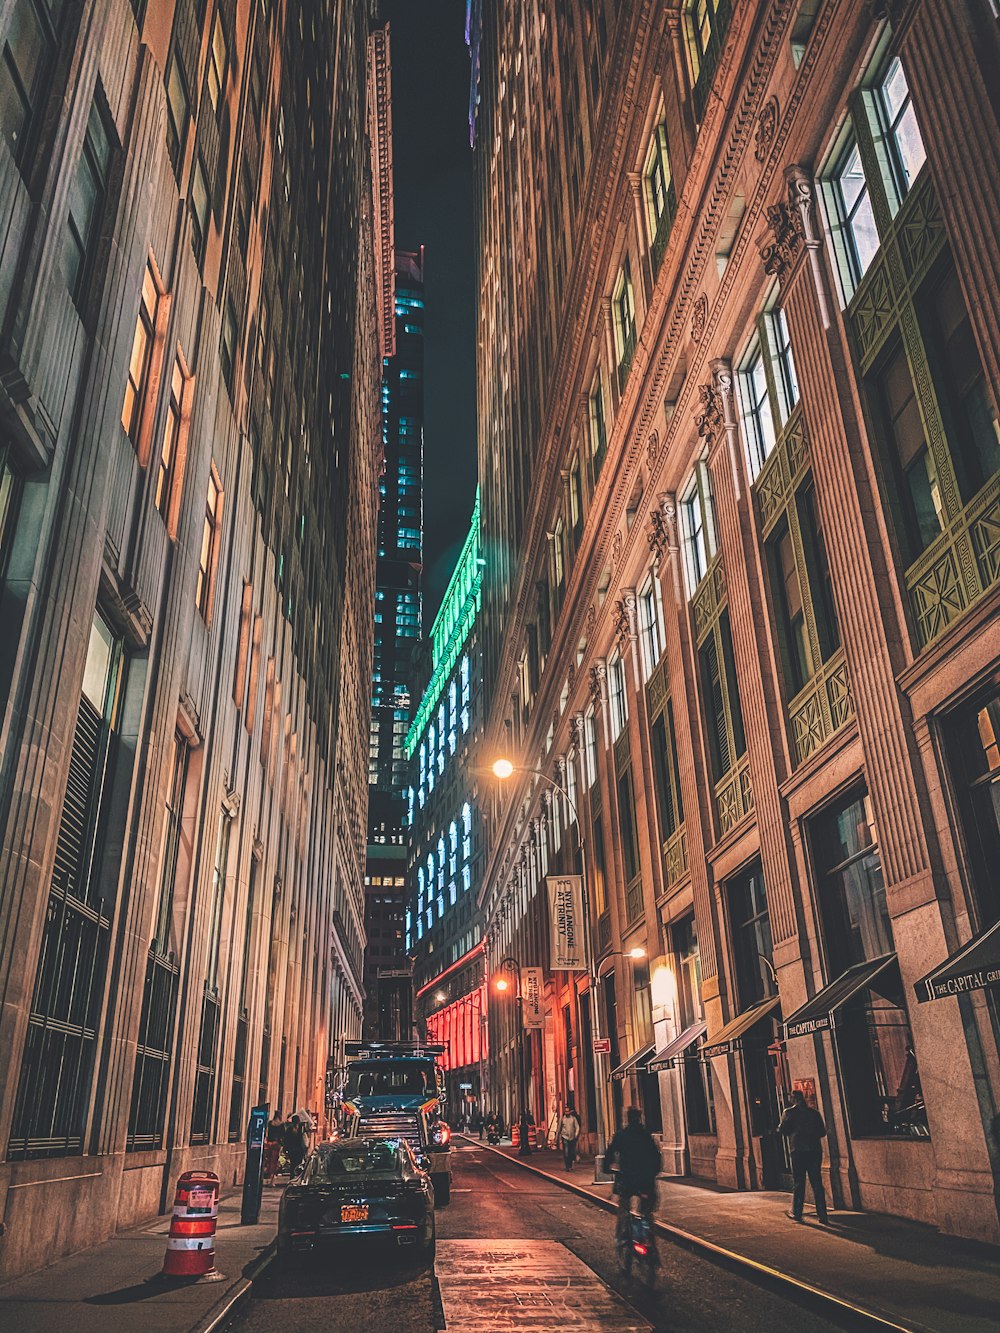 people walking on street between high rise buildings during night time